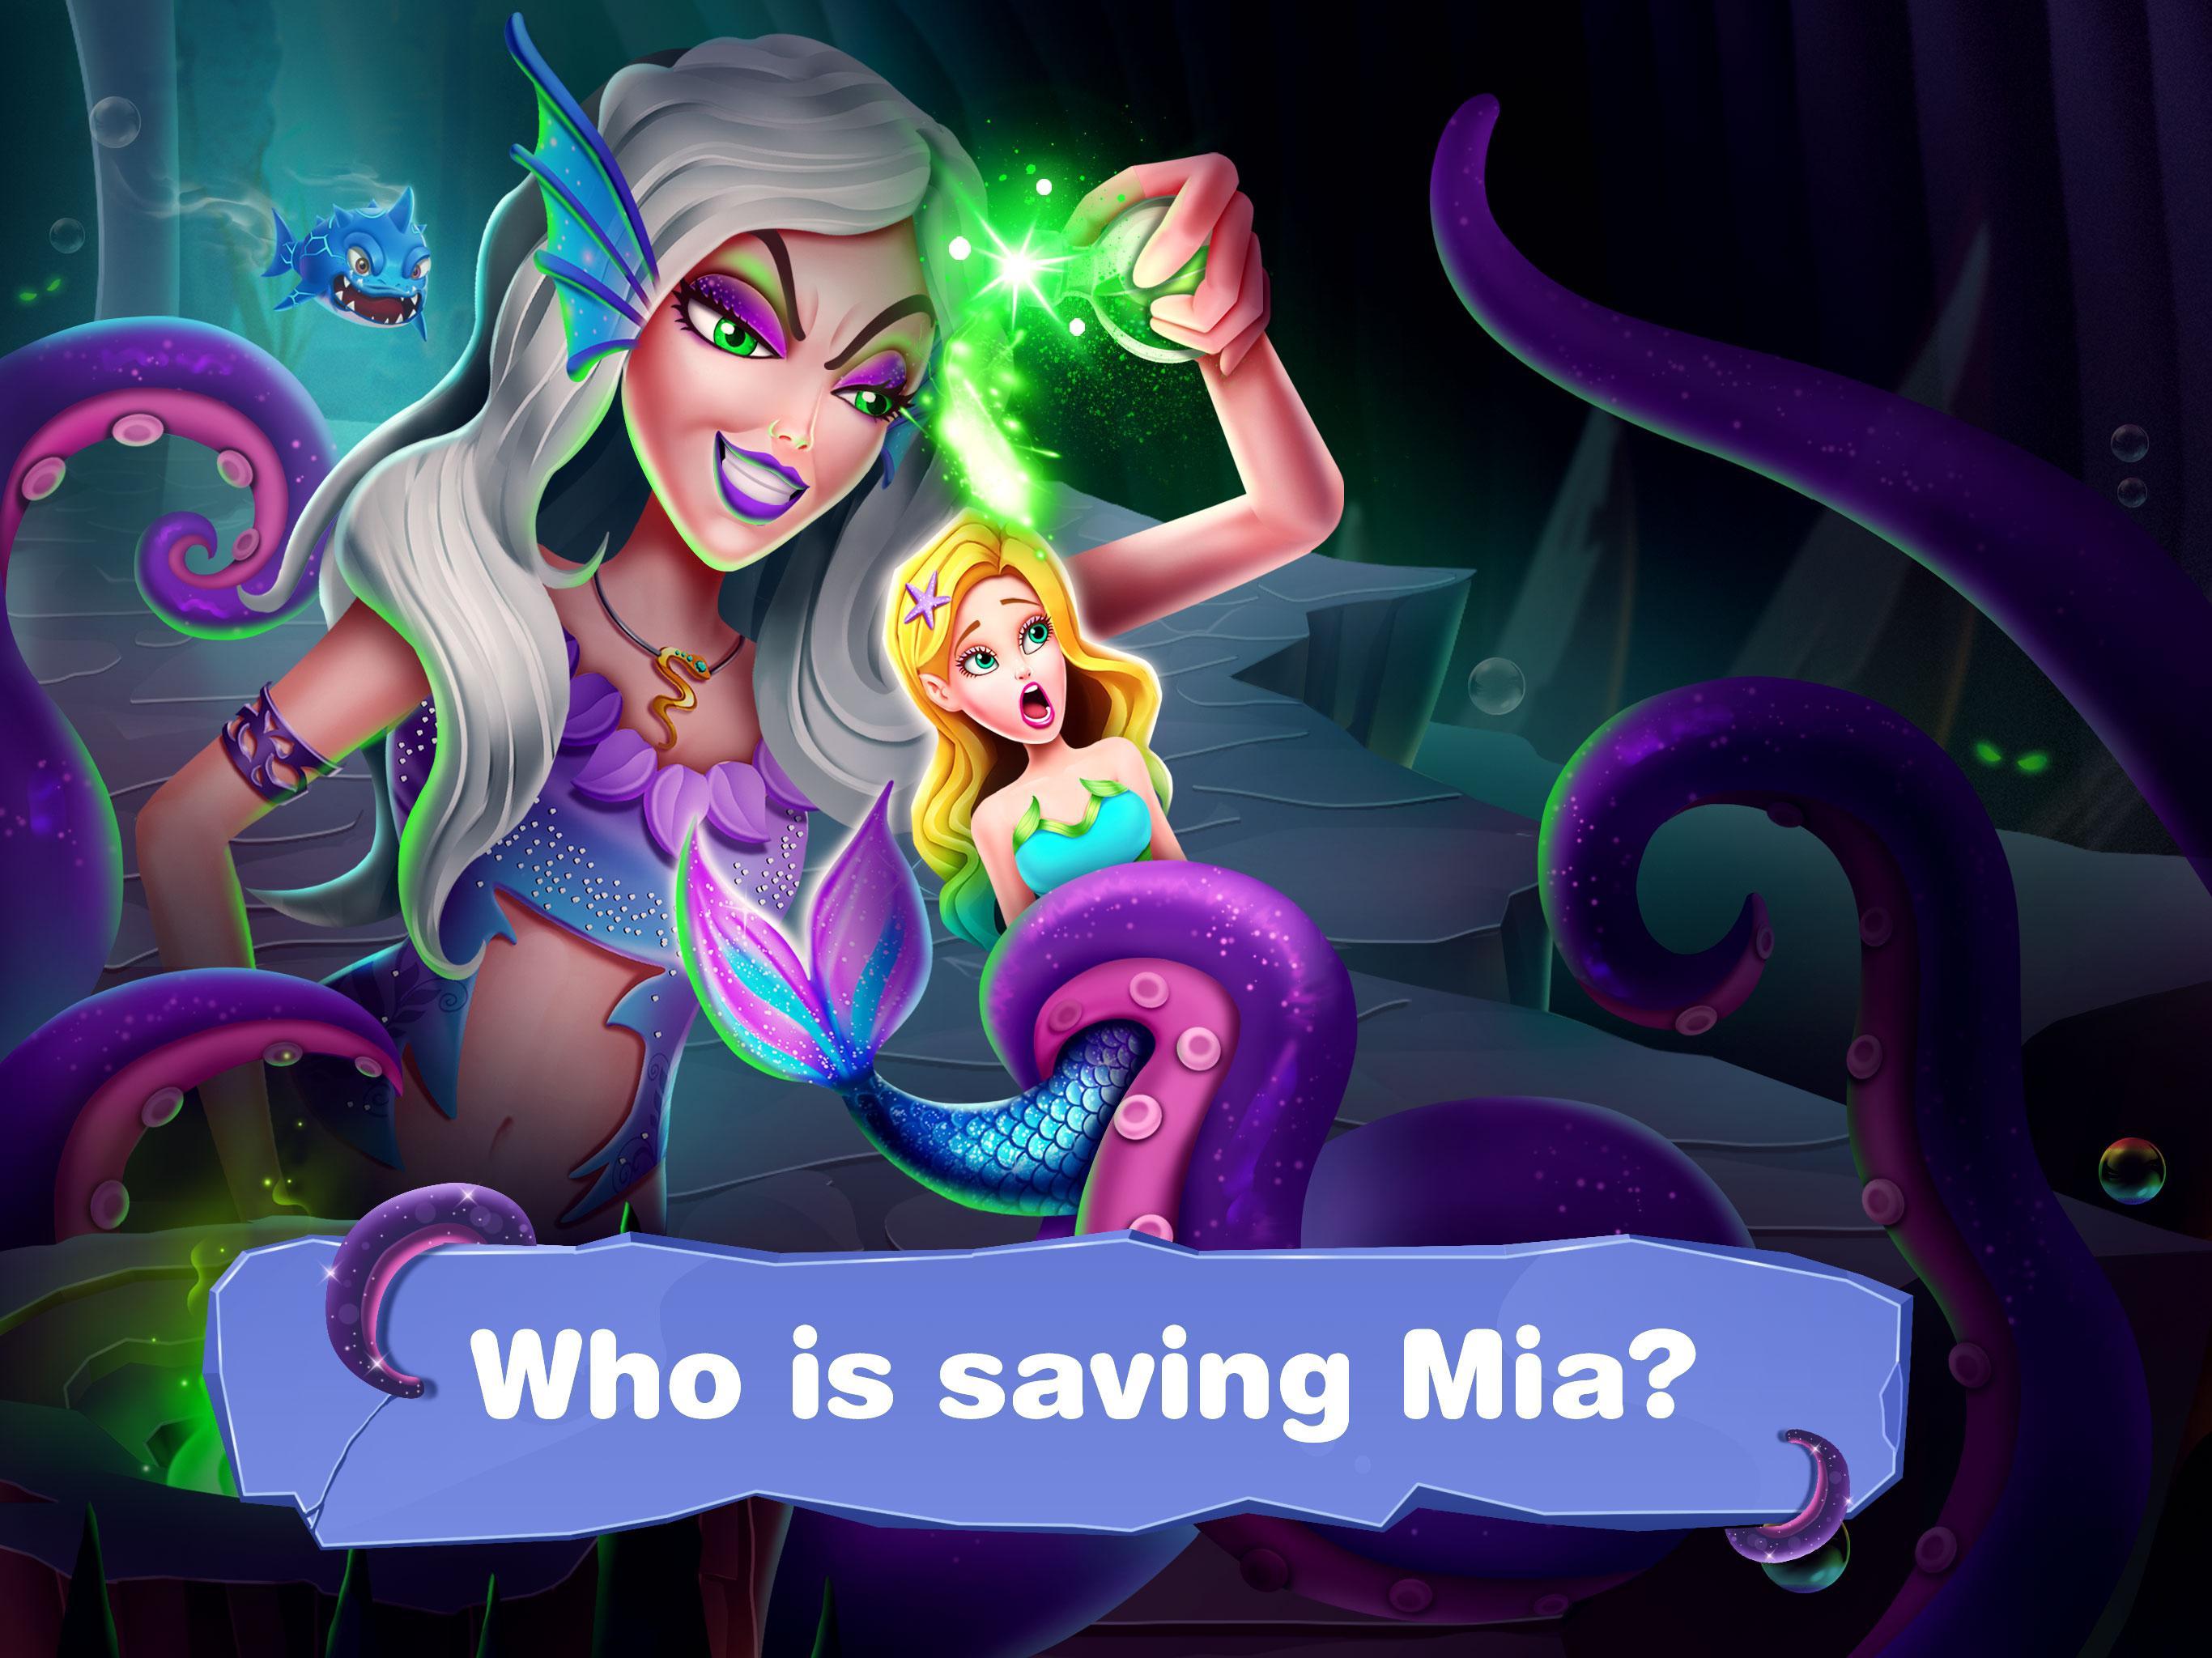 Screenshot of Mermaid Secrets 36 – Sea Witch VS Mermaid Princess